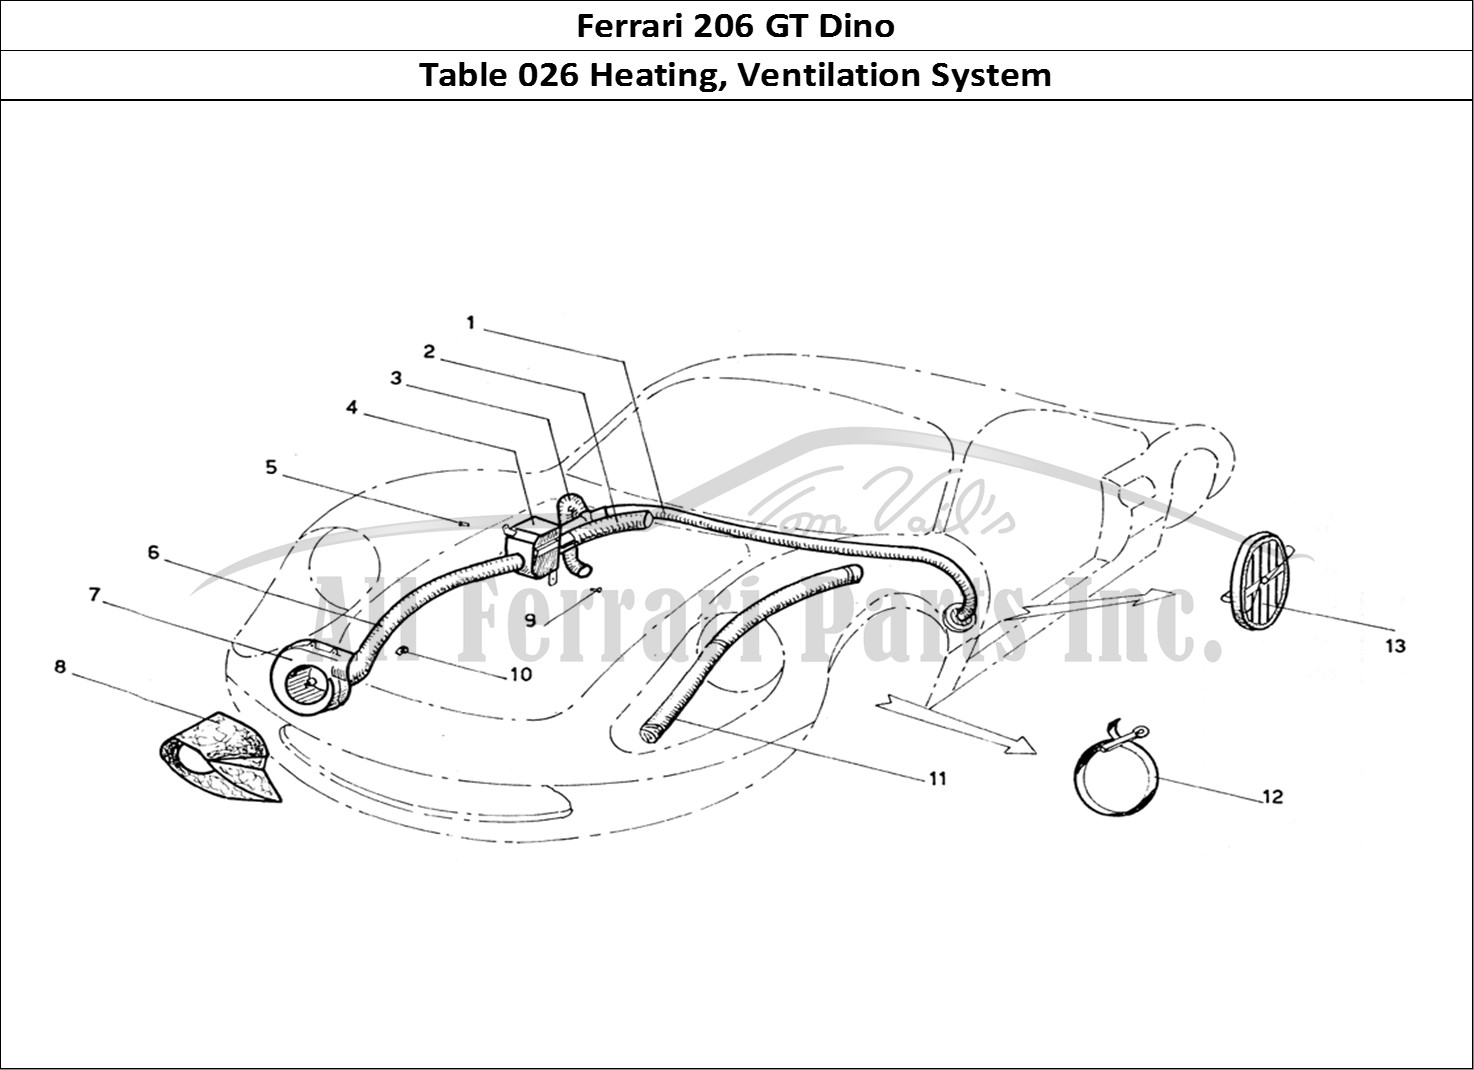 Ferrari Parts Ferrari 206 GT Dino (Coachwork) Page 026 Heater Matrix & Blowers